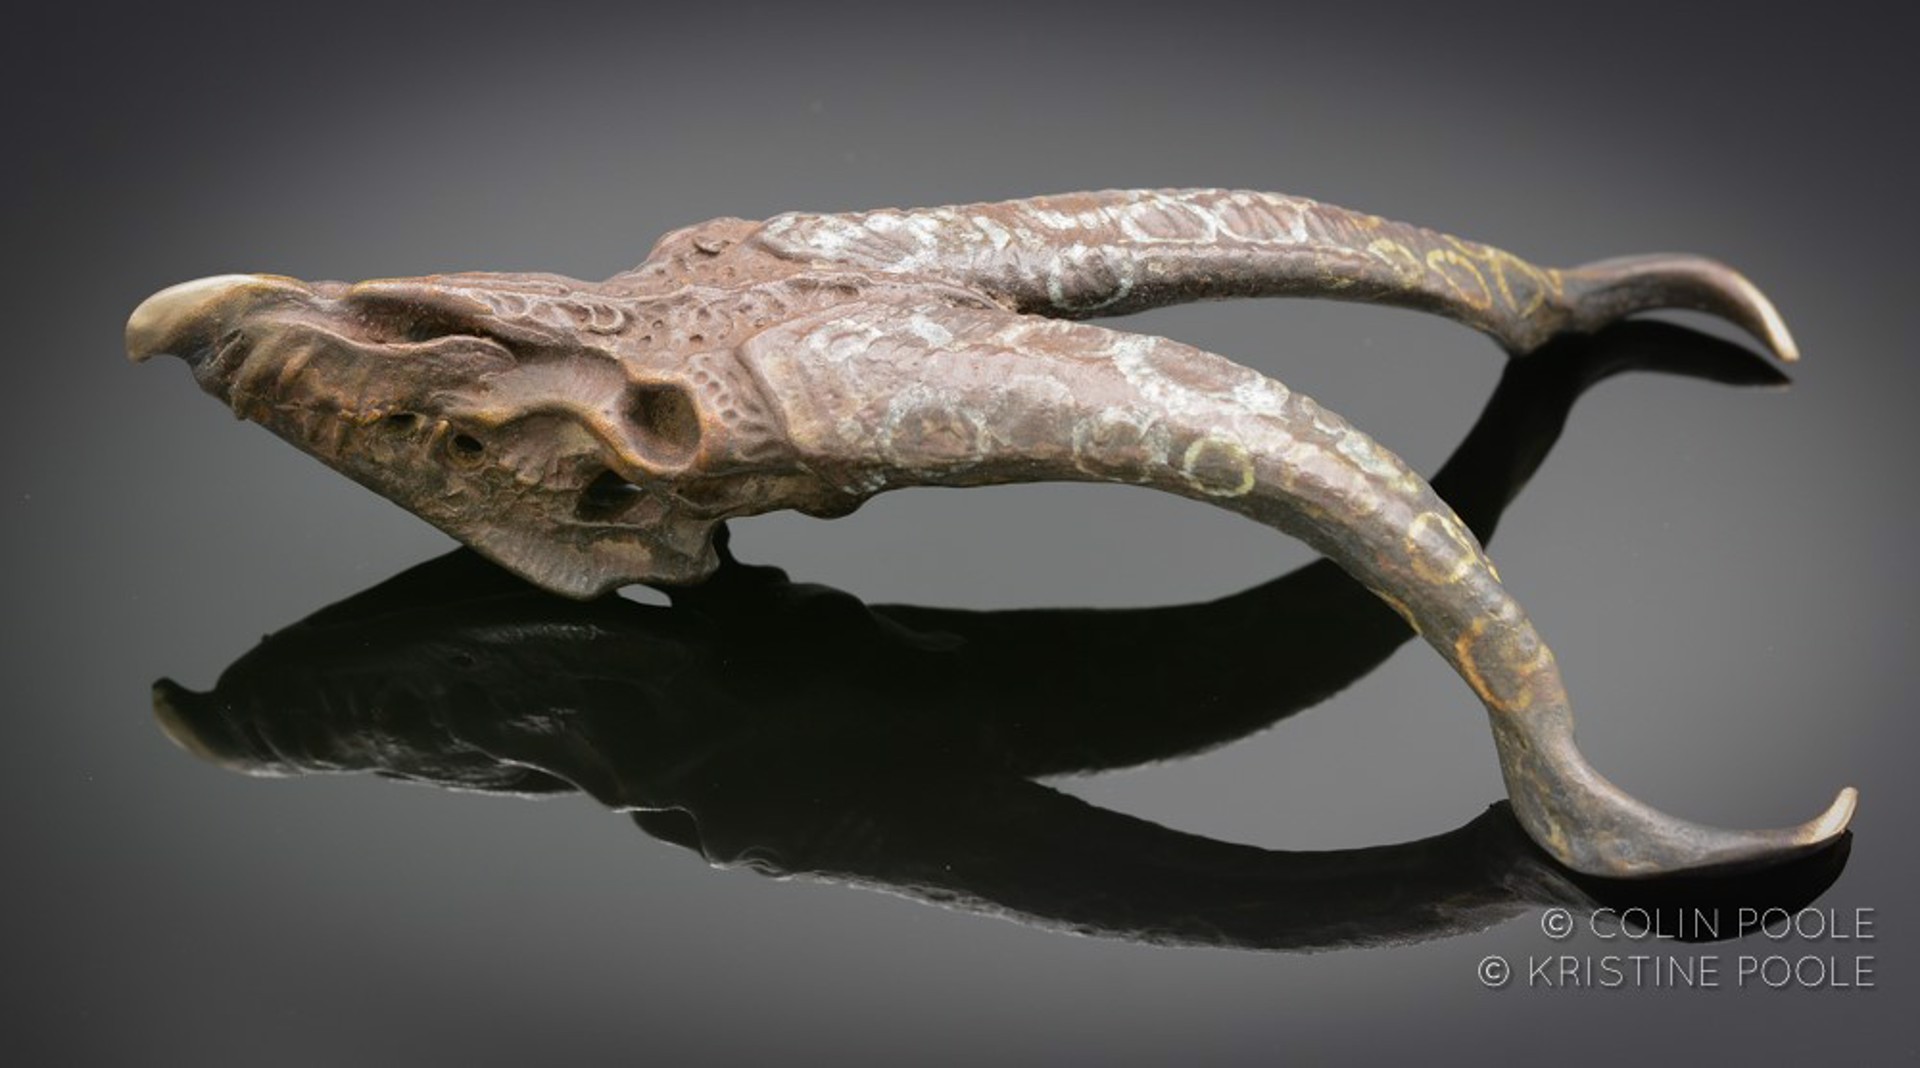 Grand Dragon Talisman Skull by Colin & Kristine Poole